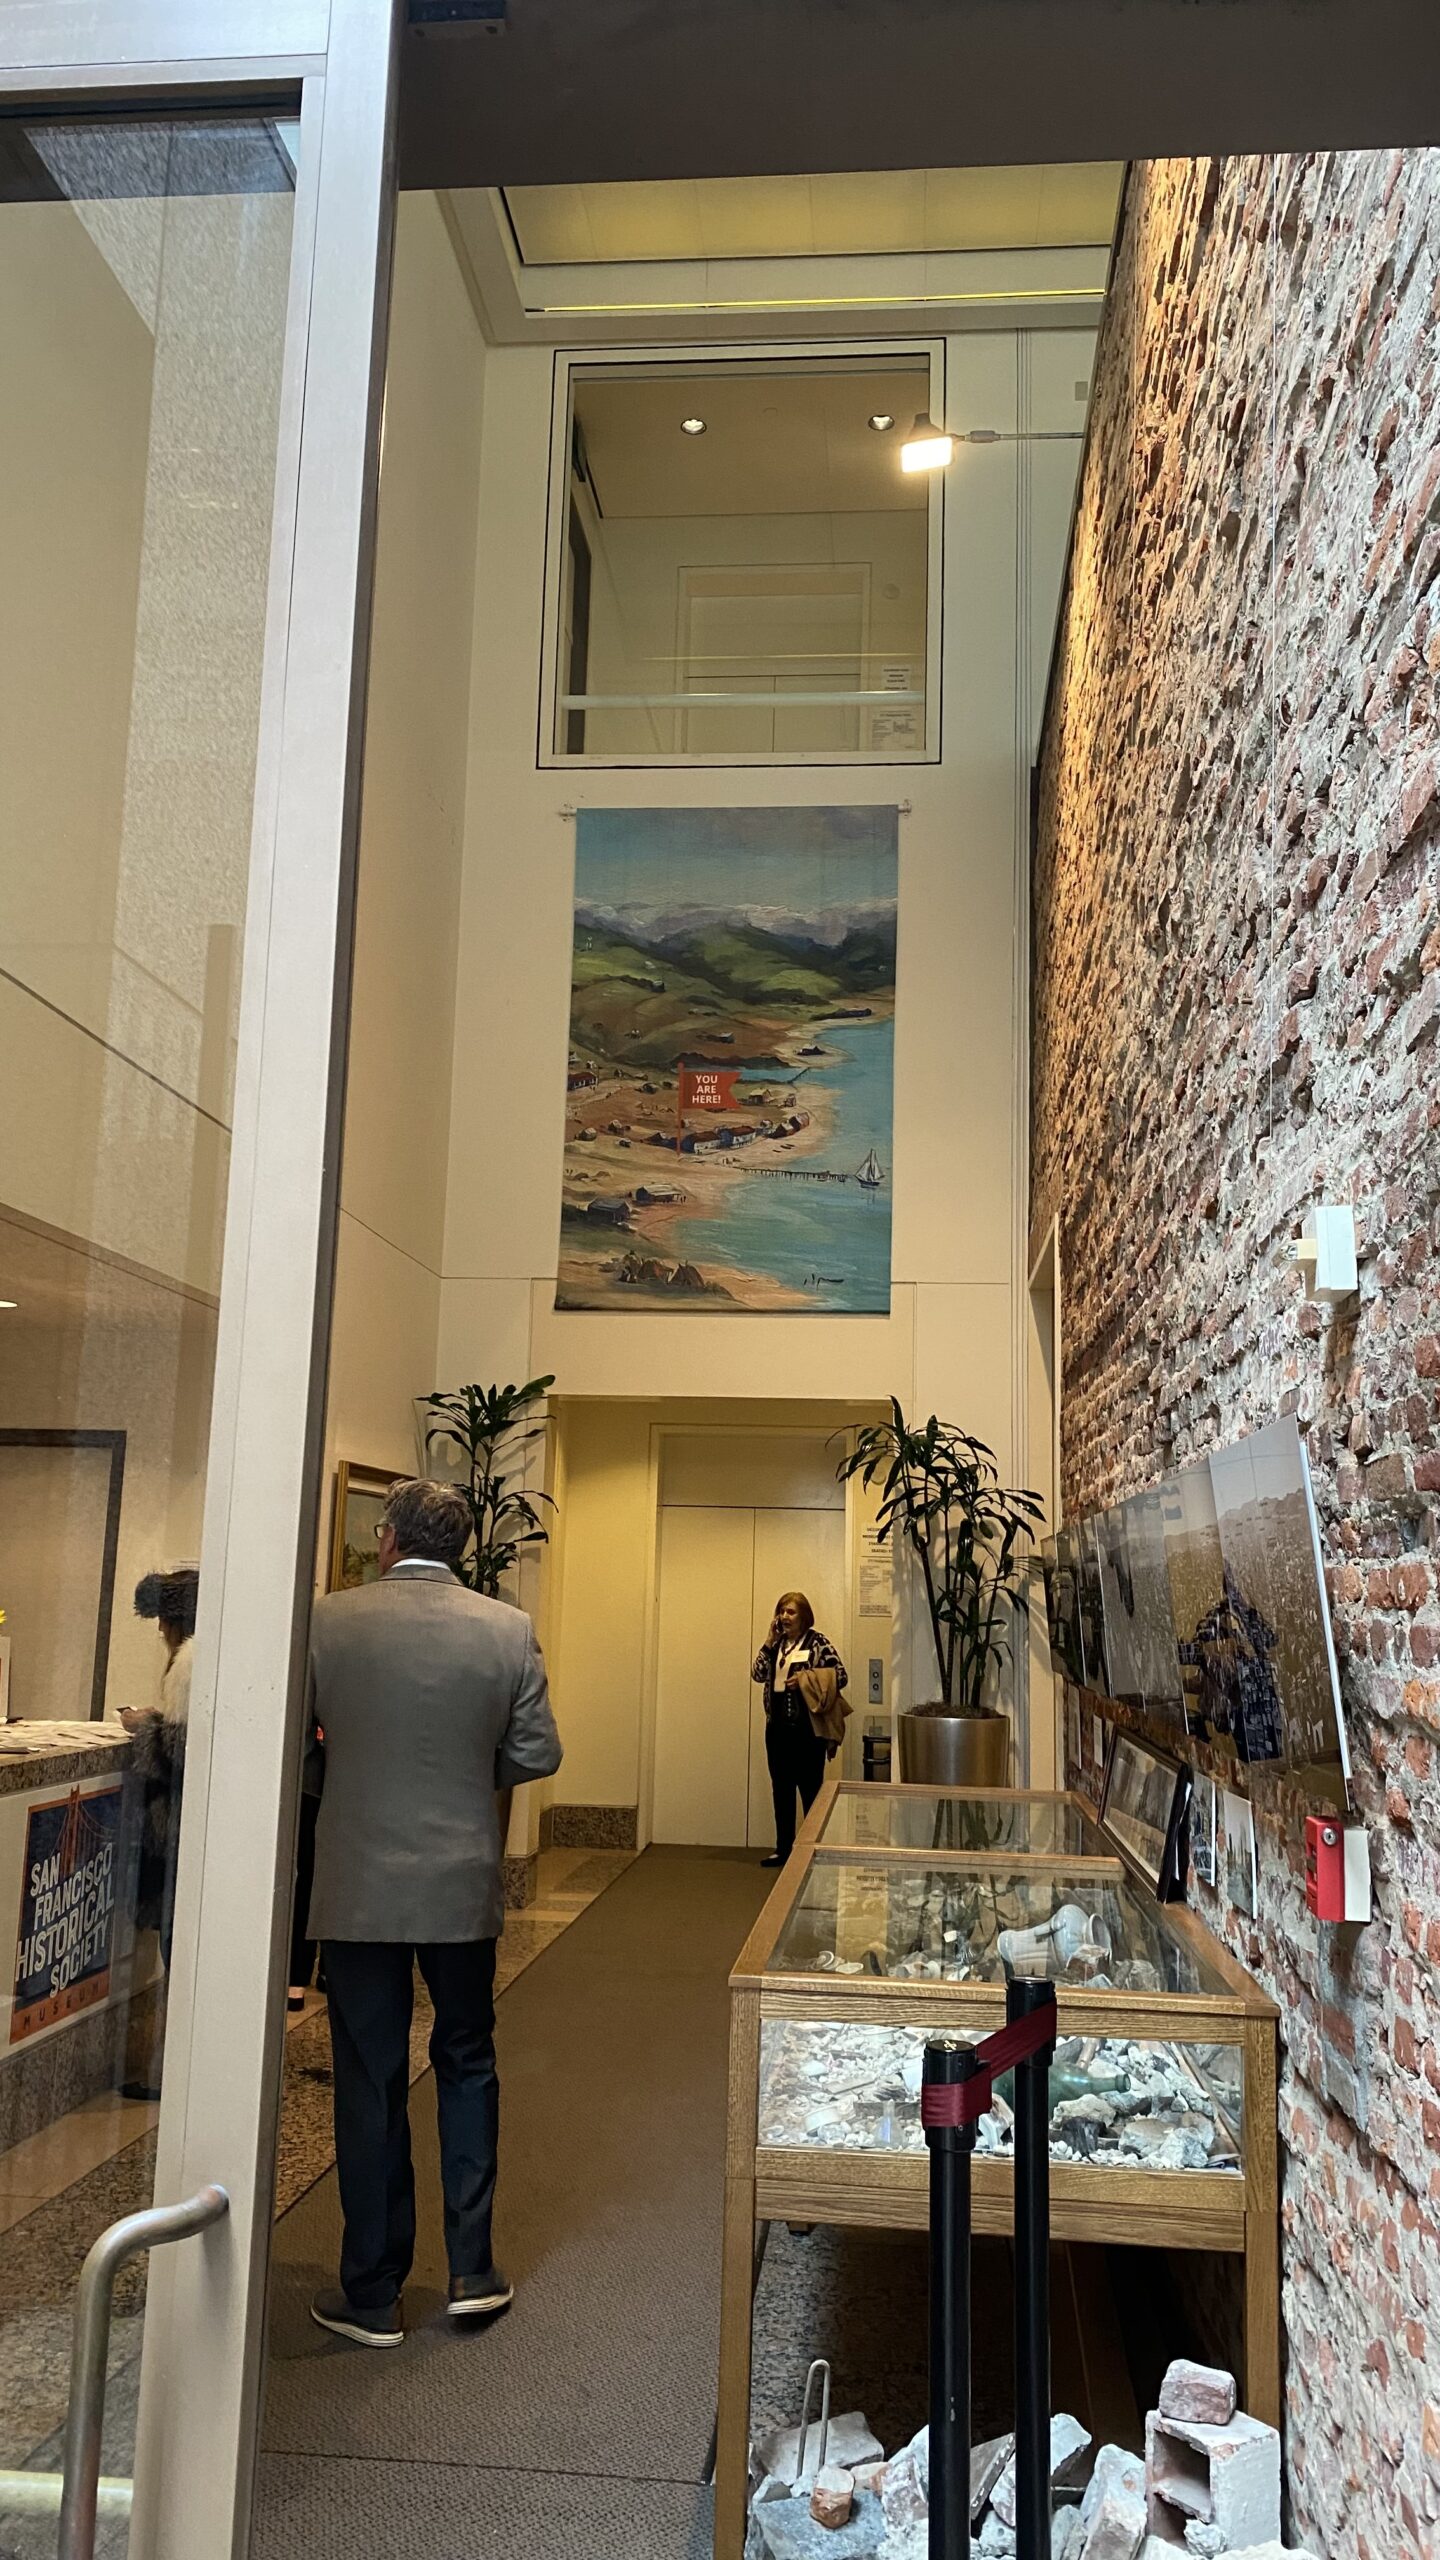 San Francisco Historical Society Museum reopening signage